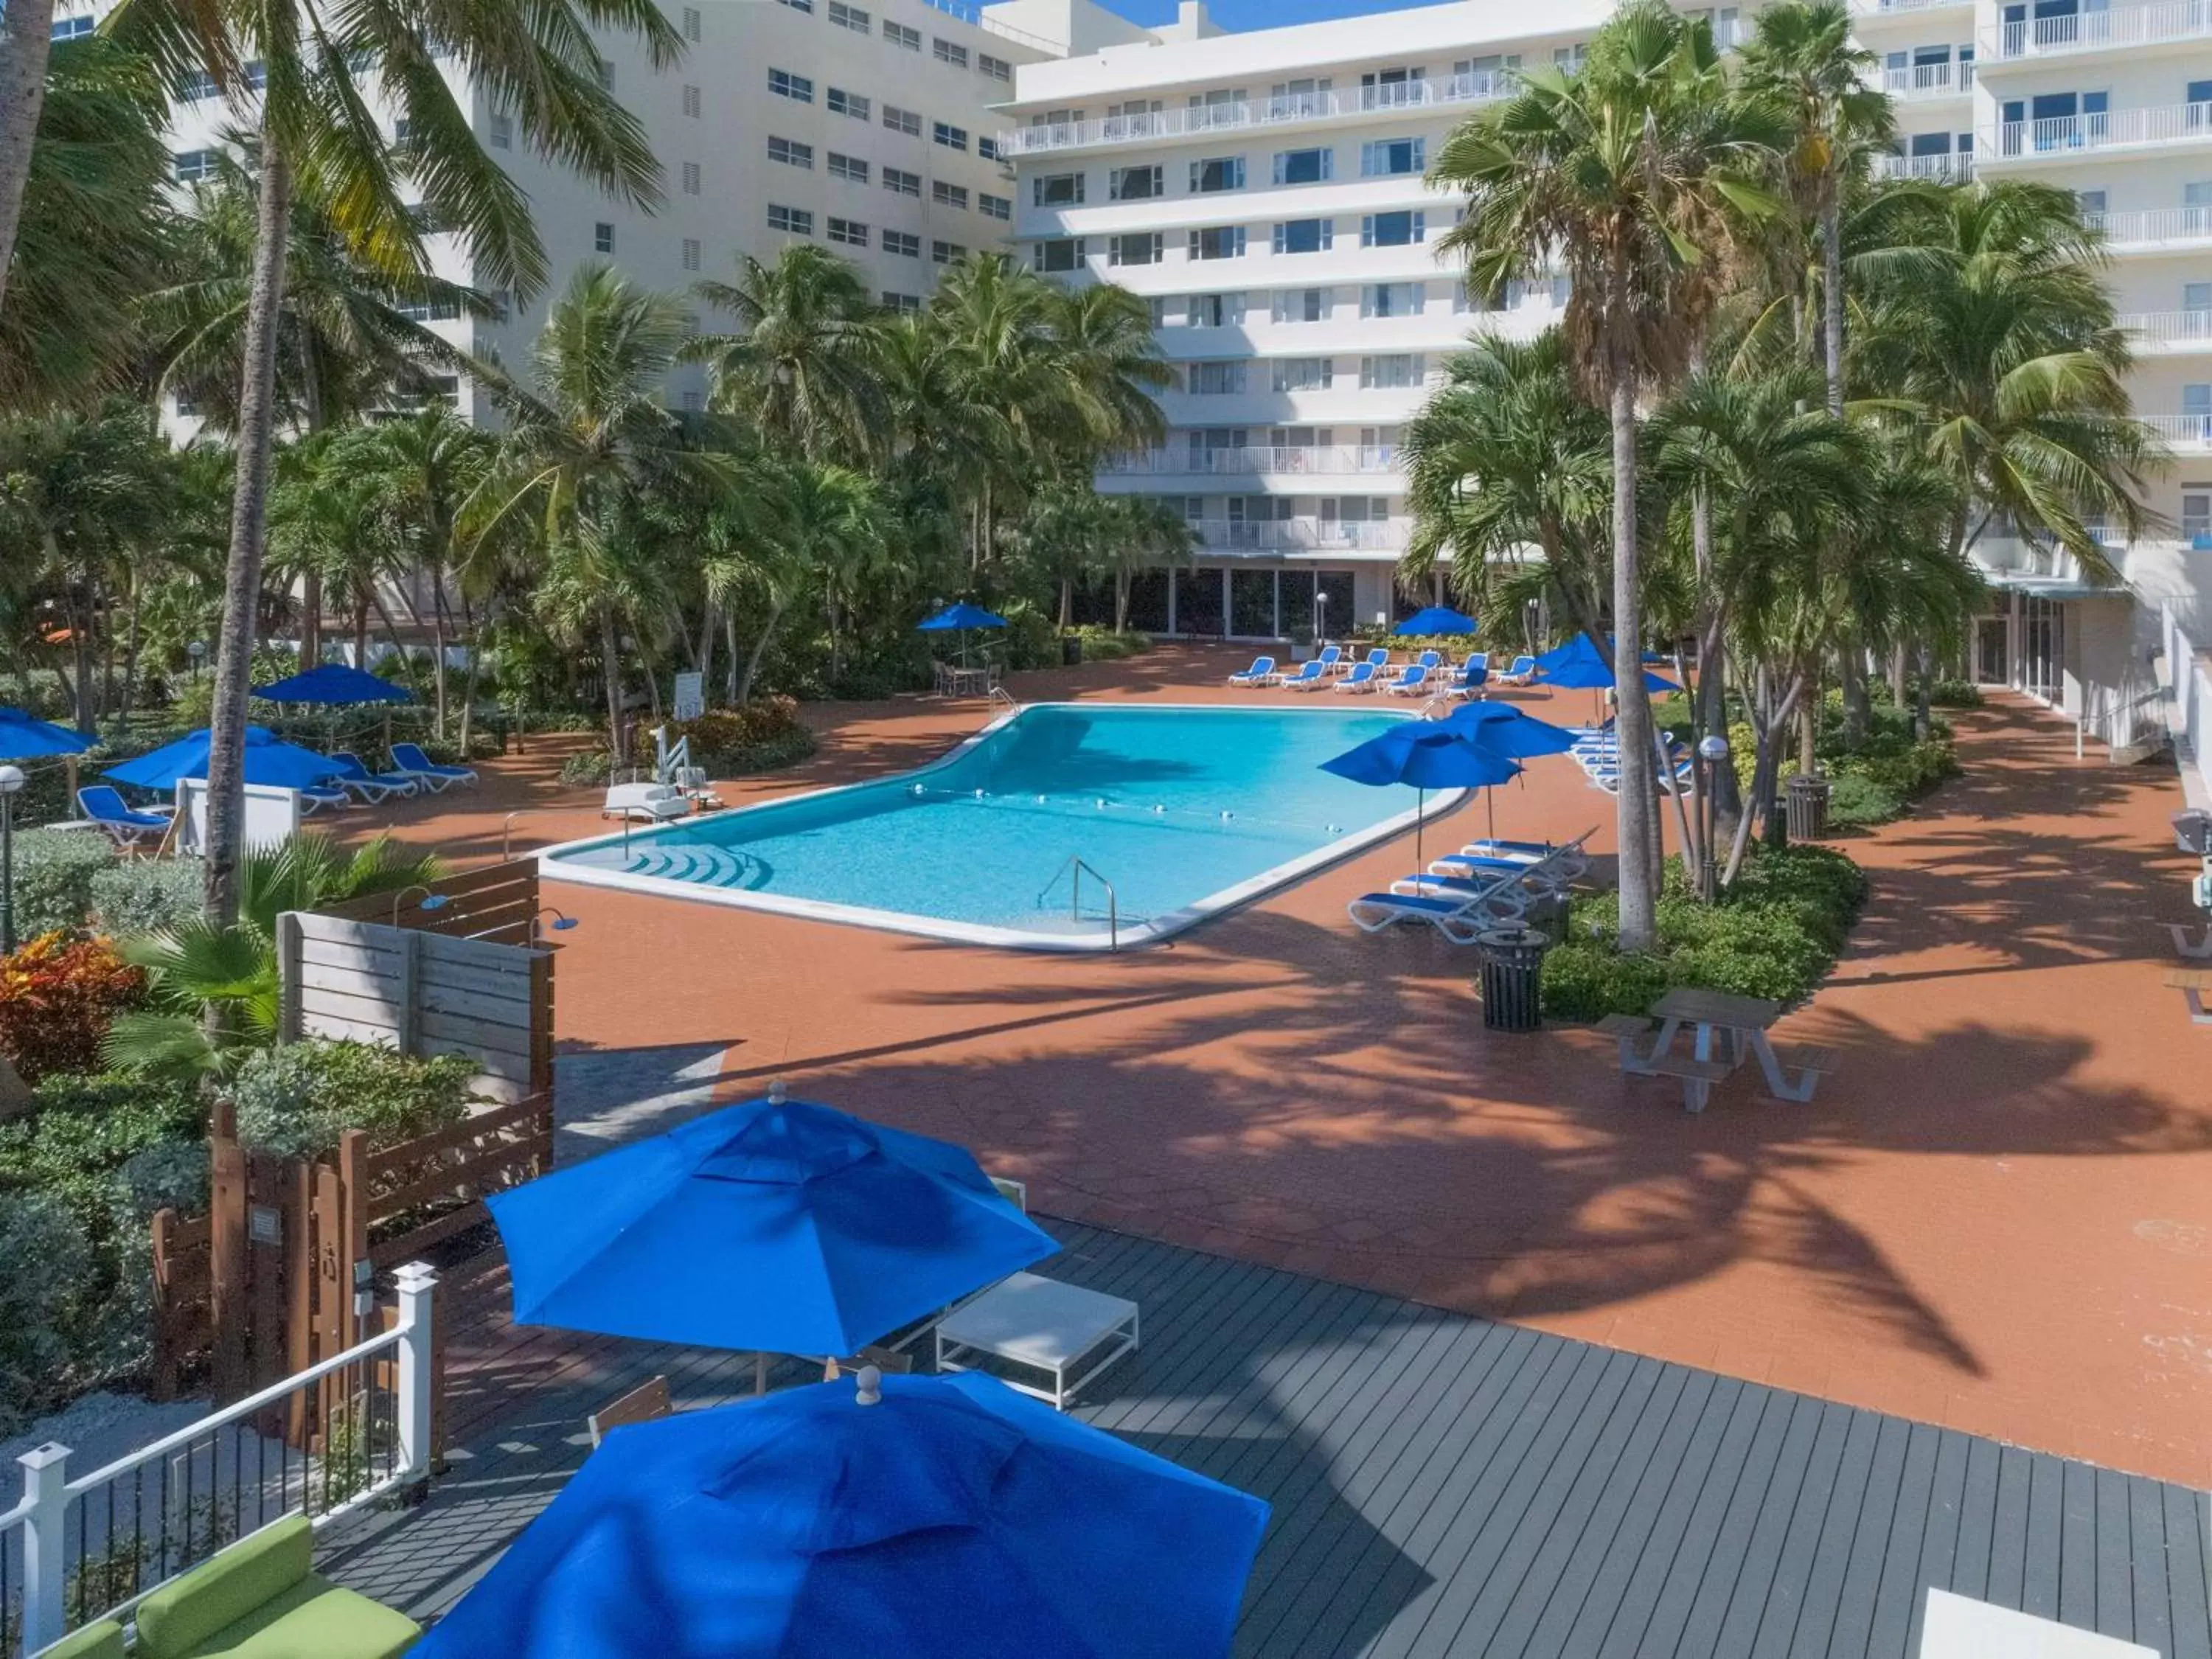 Pool View in Radisson Resort Miami Beach